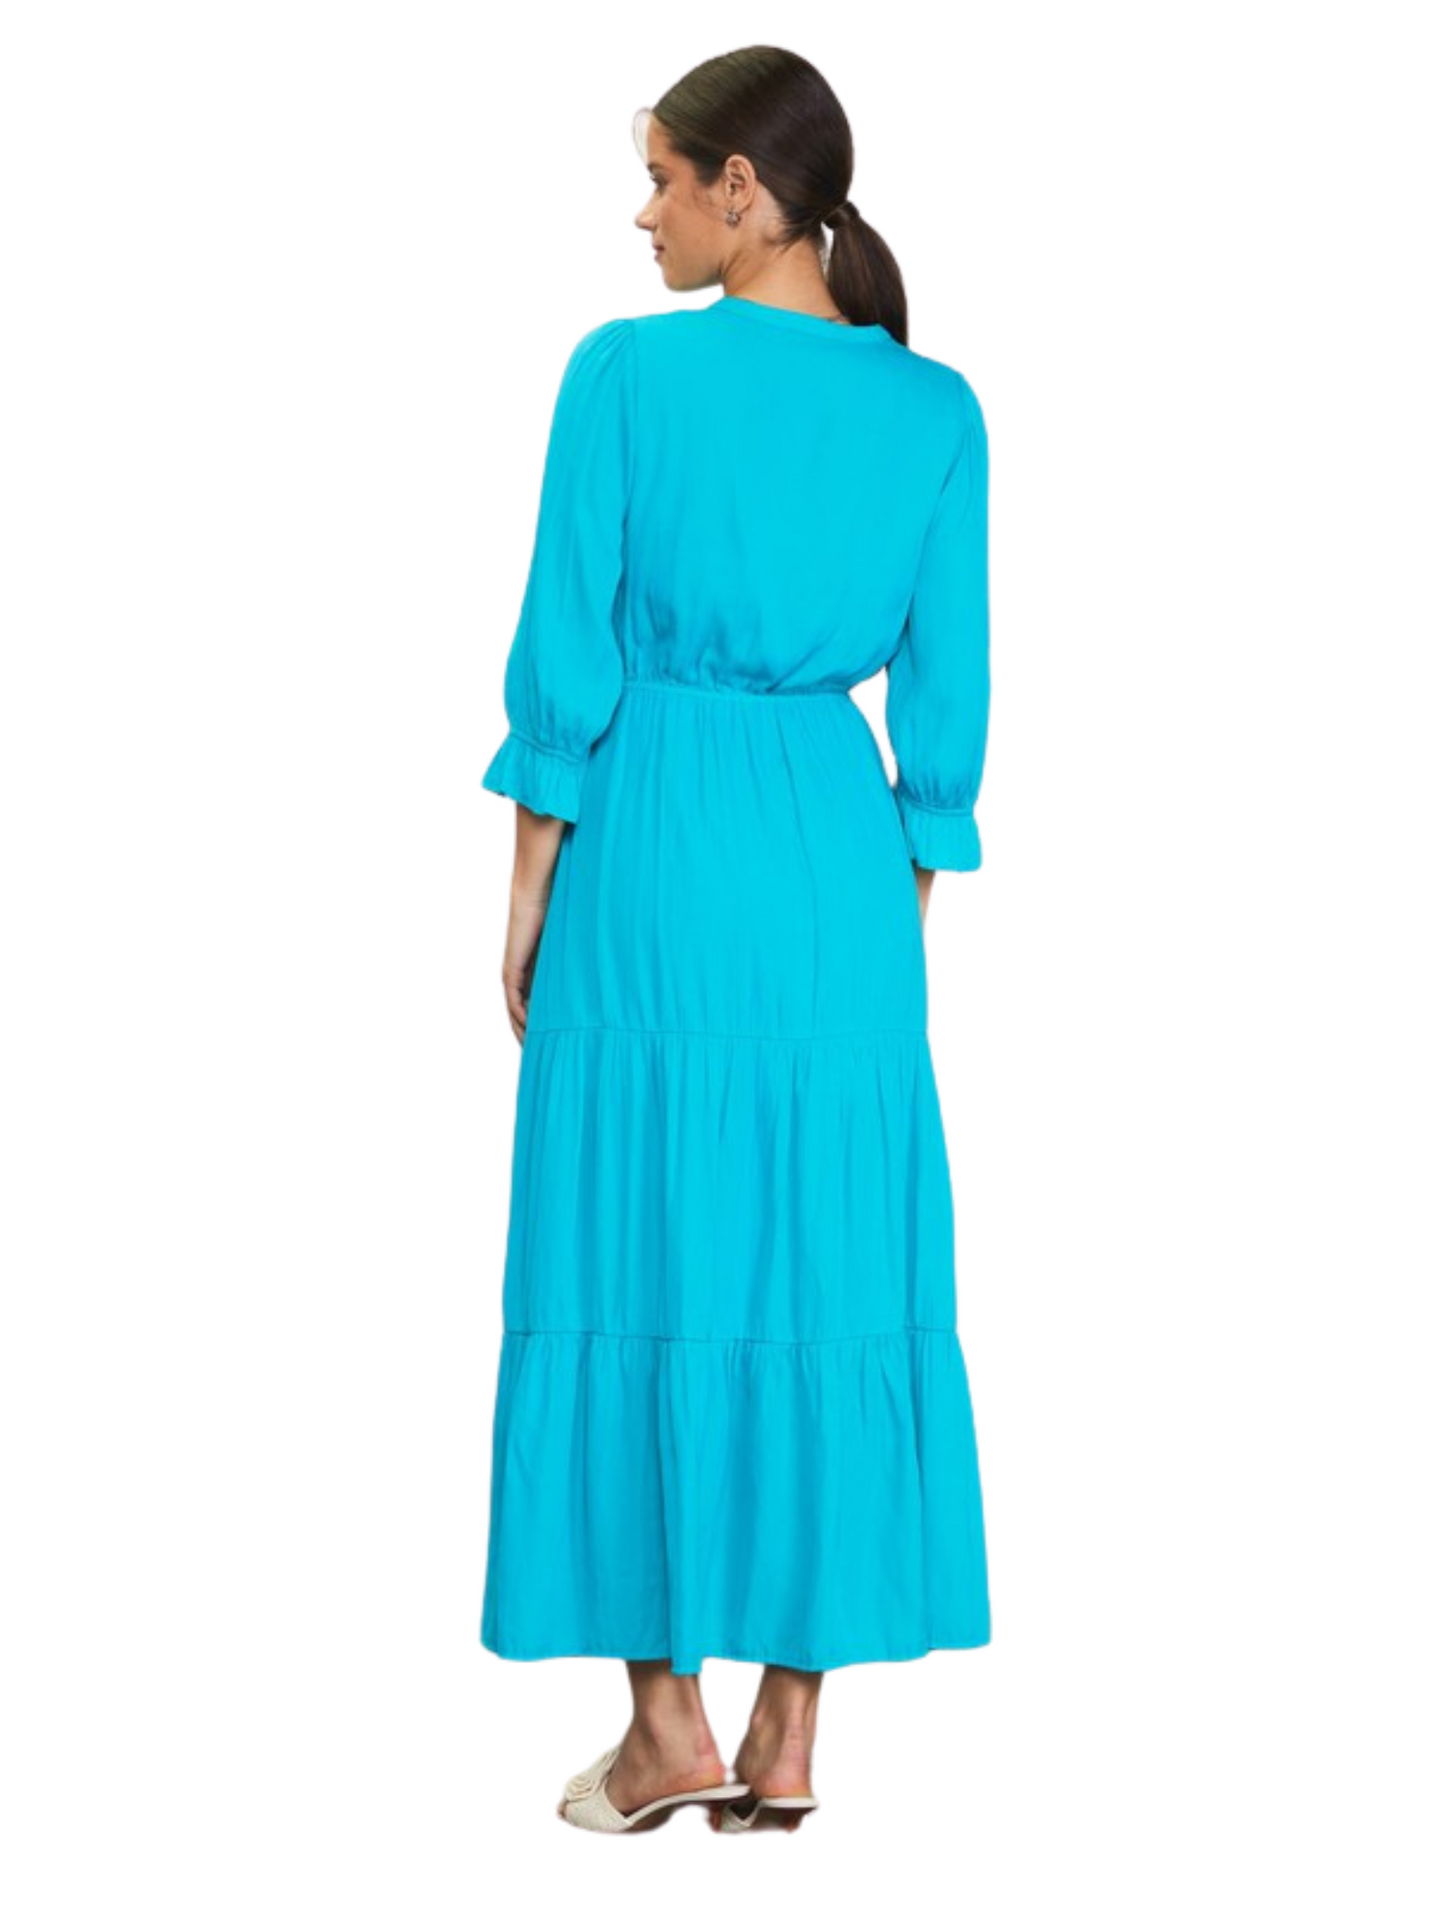 Marabella Dress - Turquoise